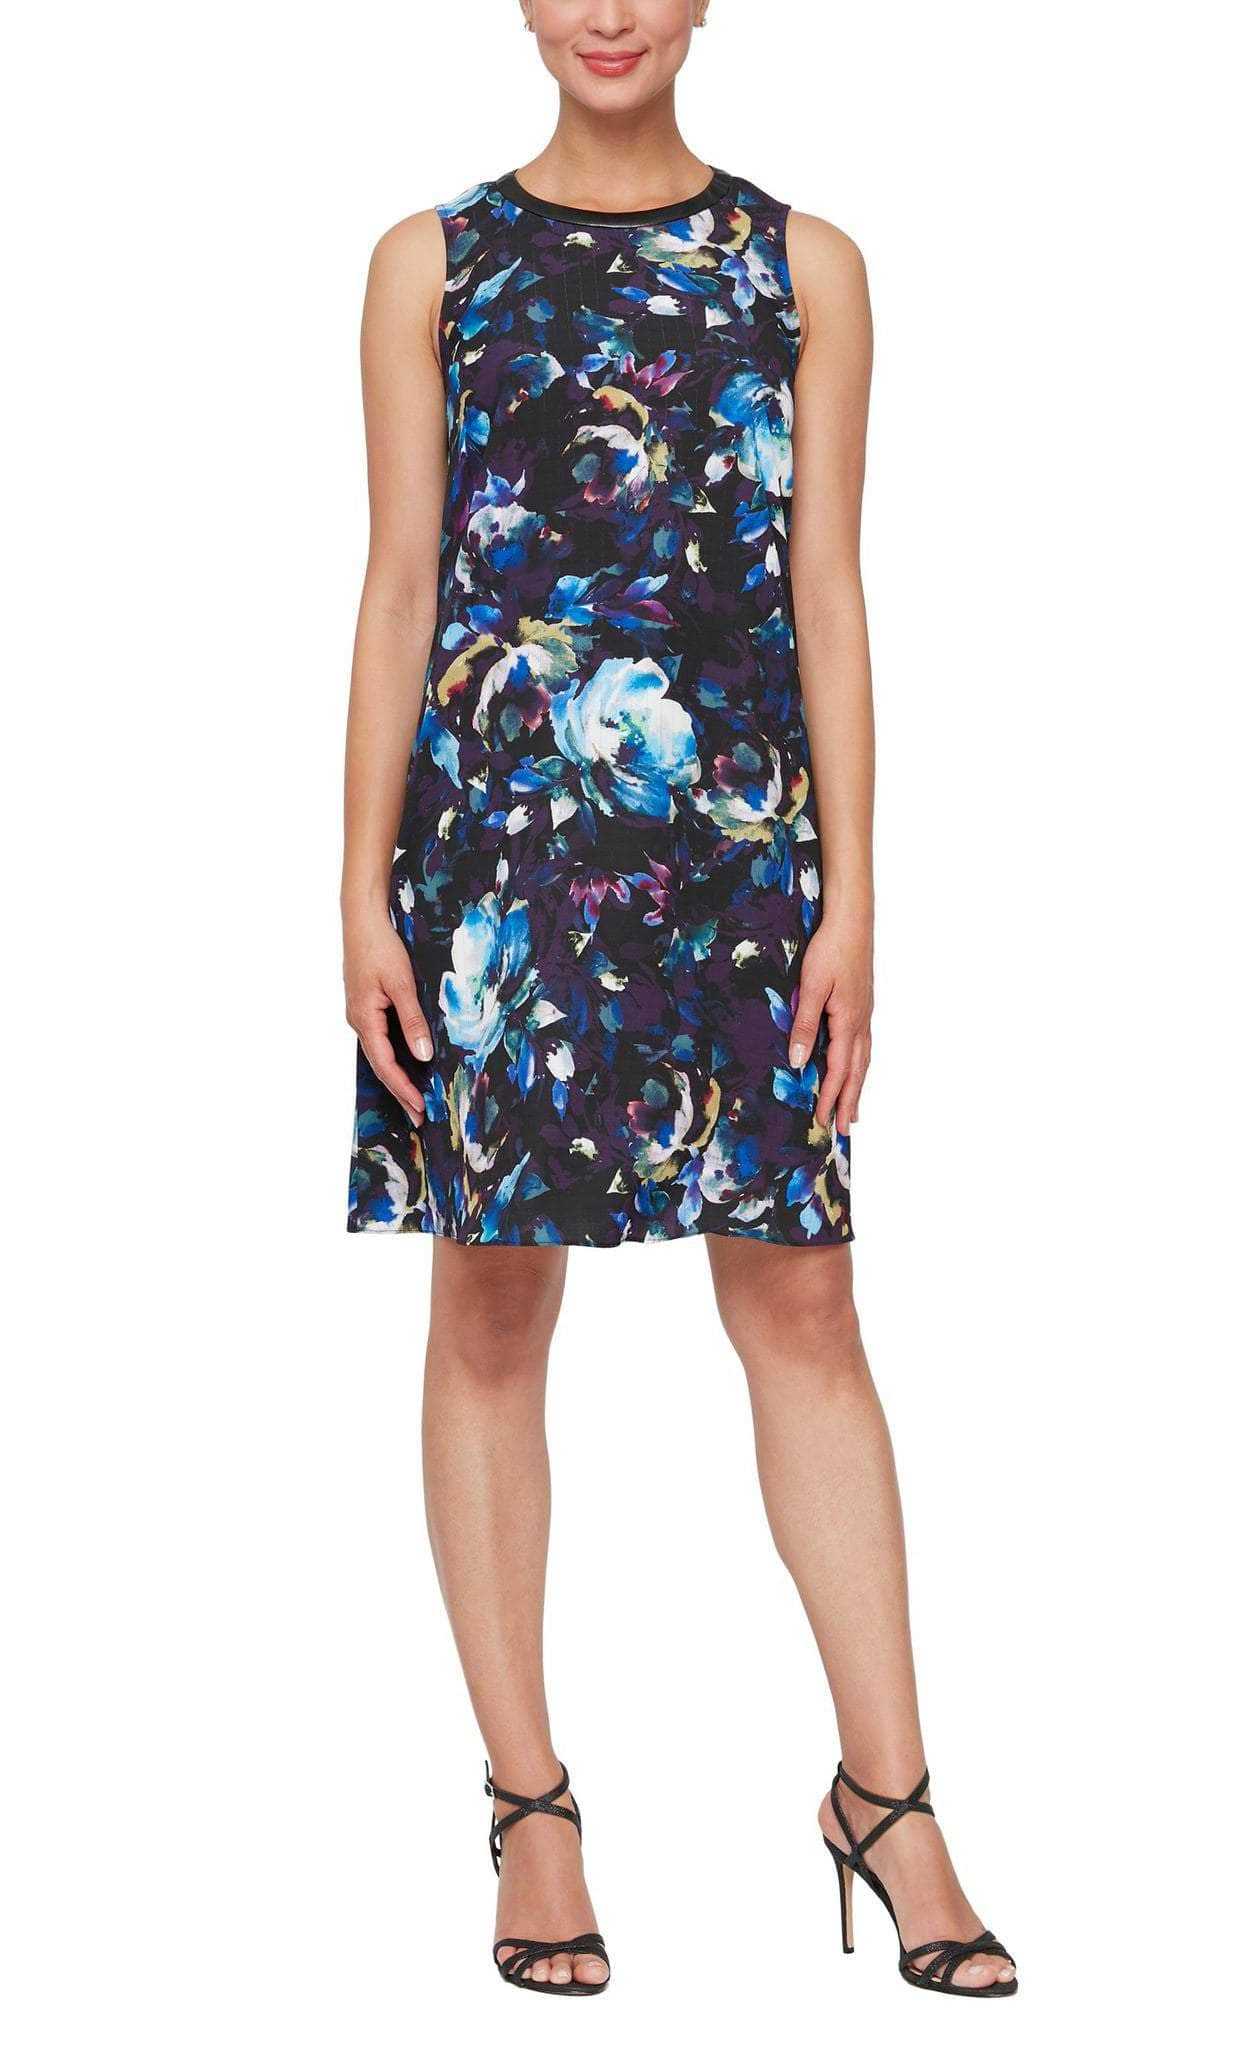 SLNY, SLNY 9160200 - Floral Jewel Sheath Short Dress